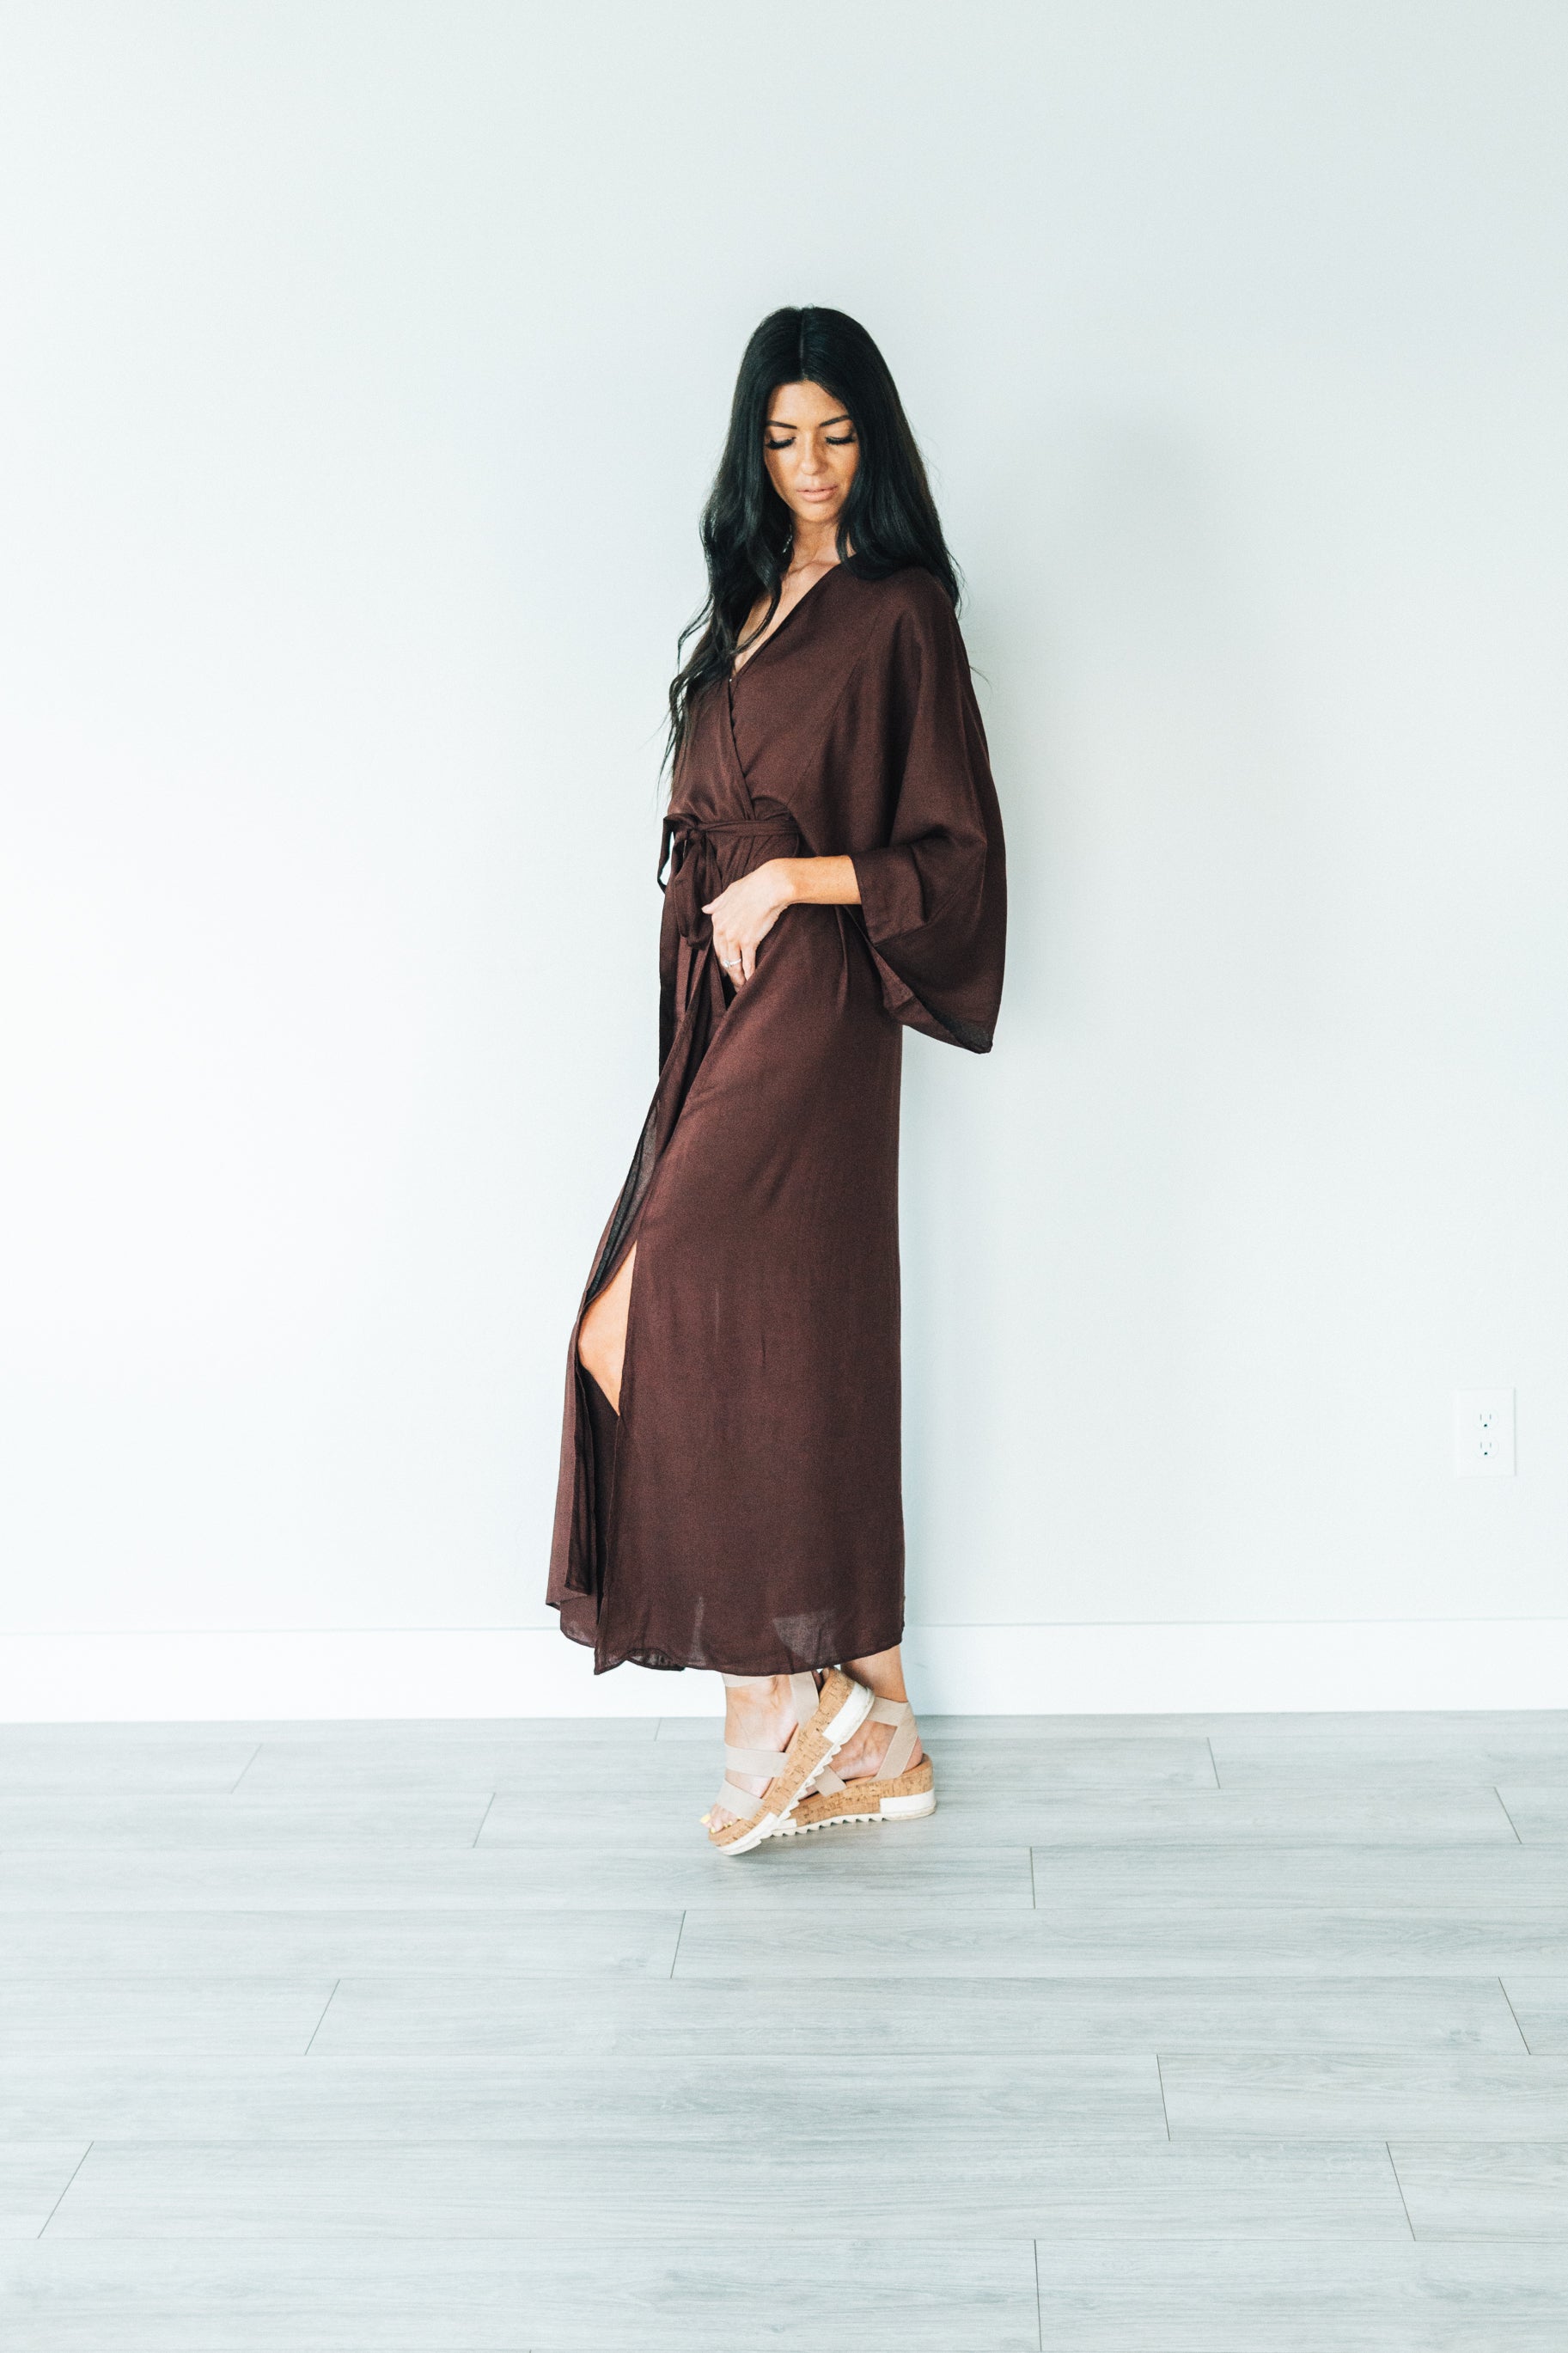 Cotton Kimono Wrap, Lightweight Summer Robe, Casual Chic Lounge Wear